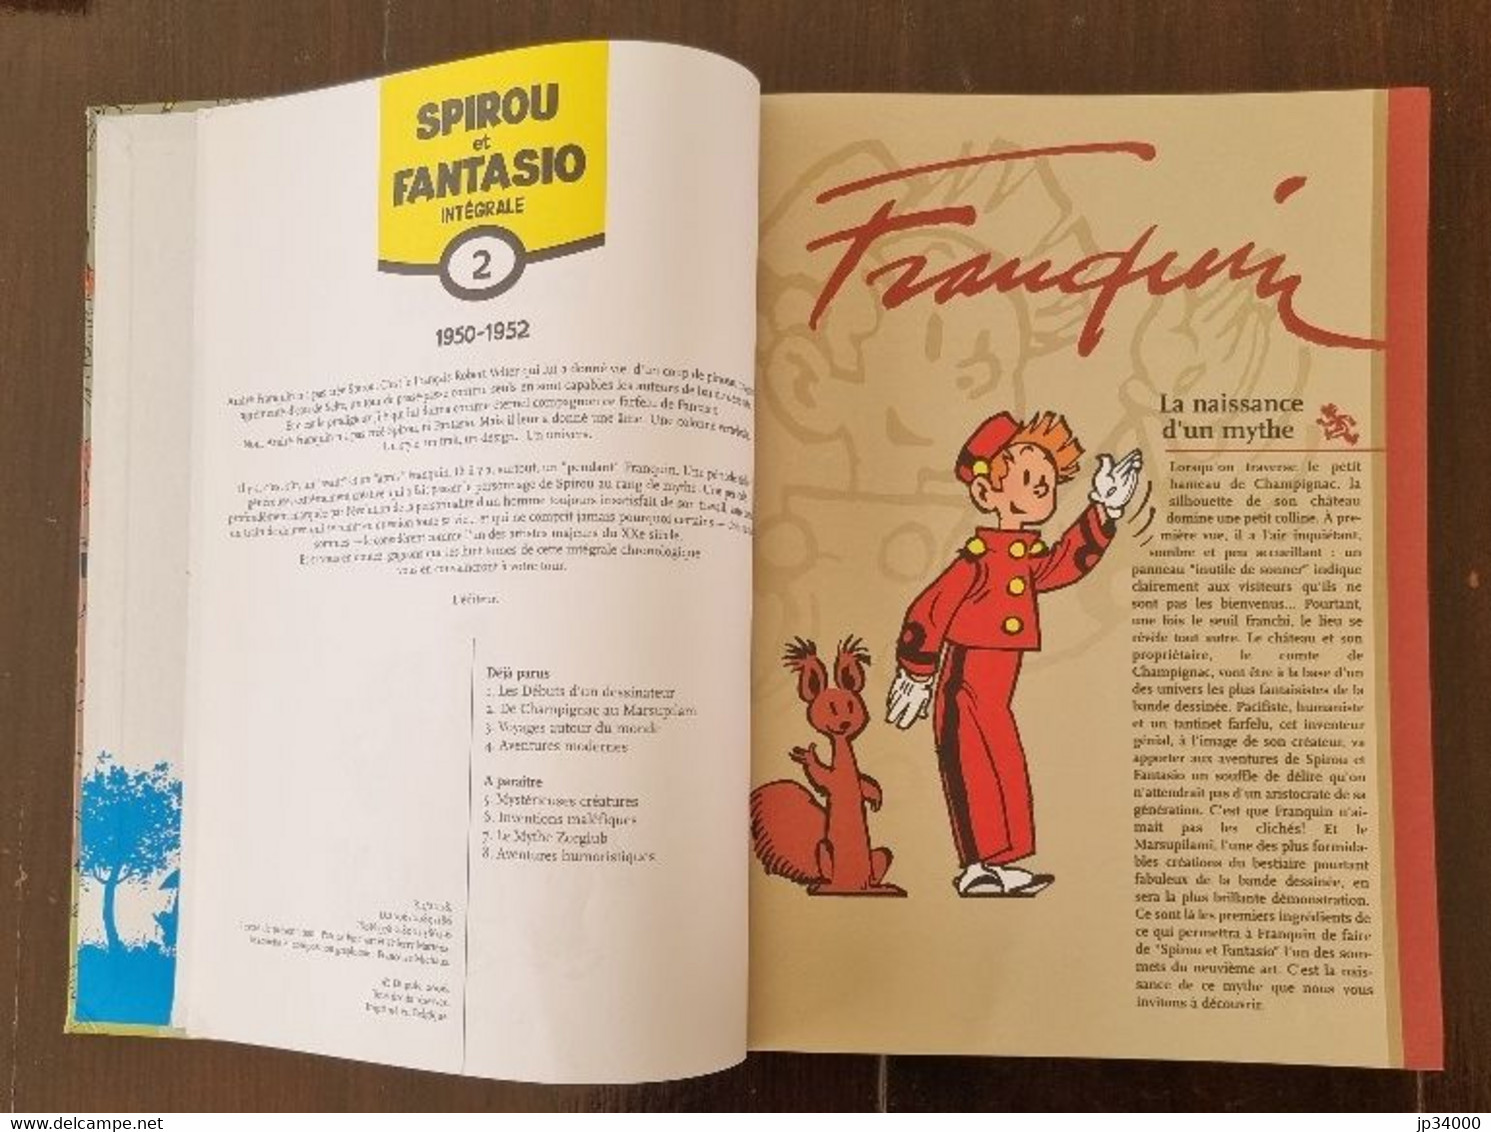 SPIROU ET FANTASIO T. 2  1950-1952  Les Integrales - FRANQUIN - Ed. Dupuis 2006 - Spirou Et Fantasio